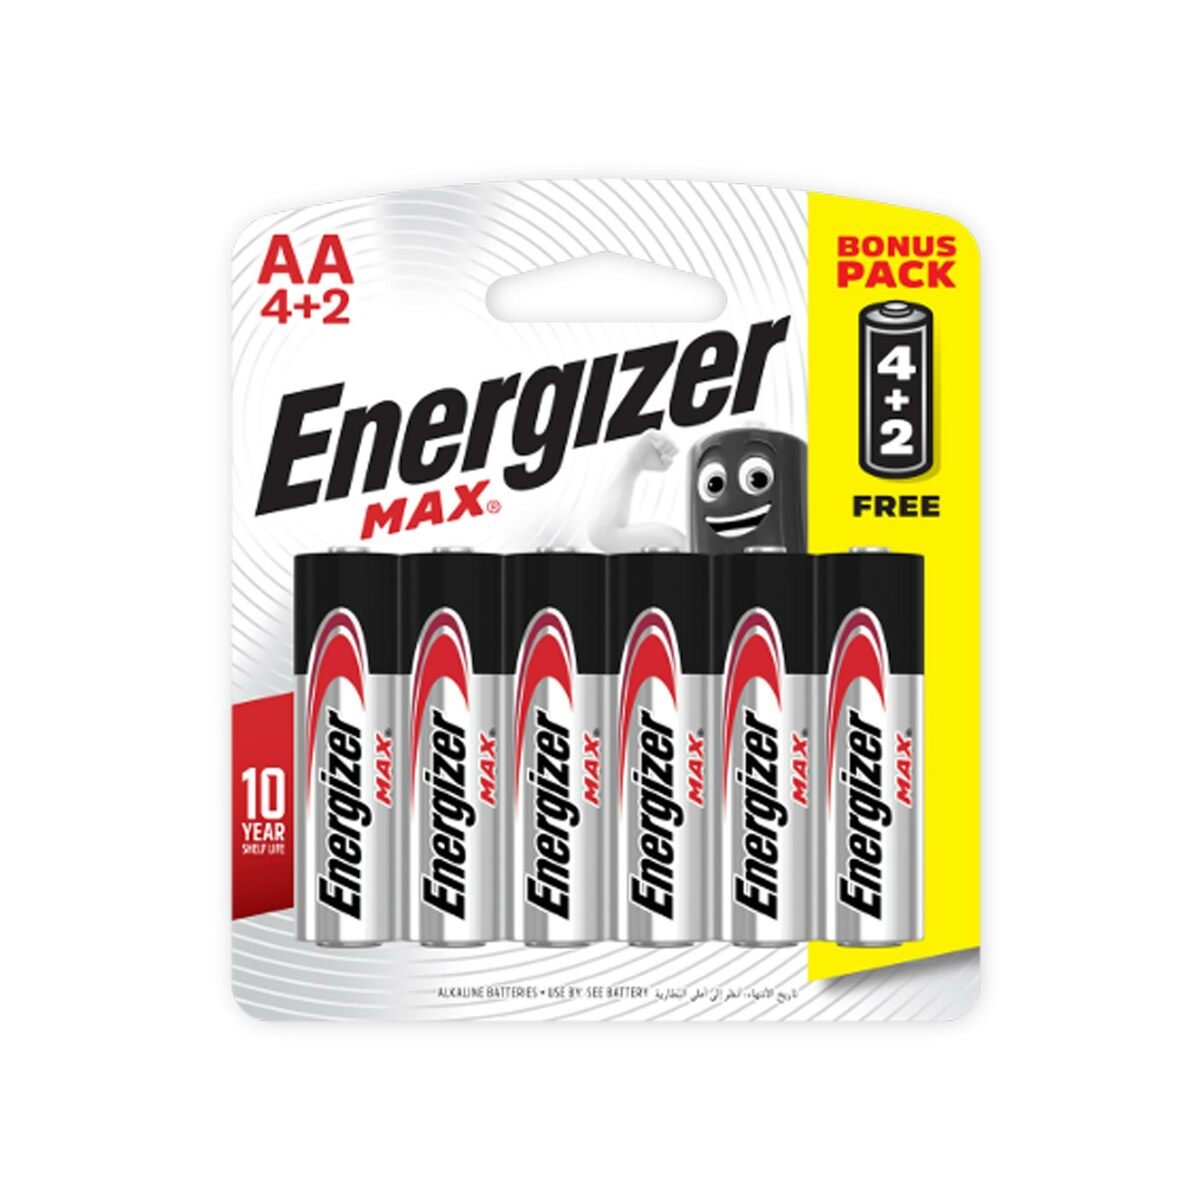 Energizer Max AA Alkaline Battery 4+2